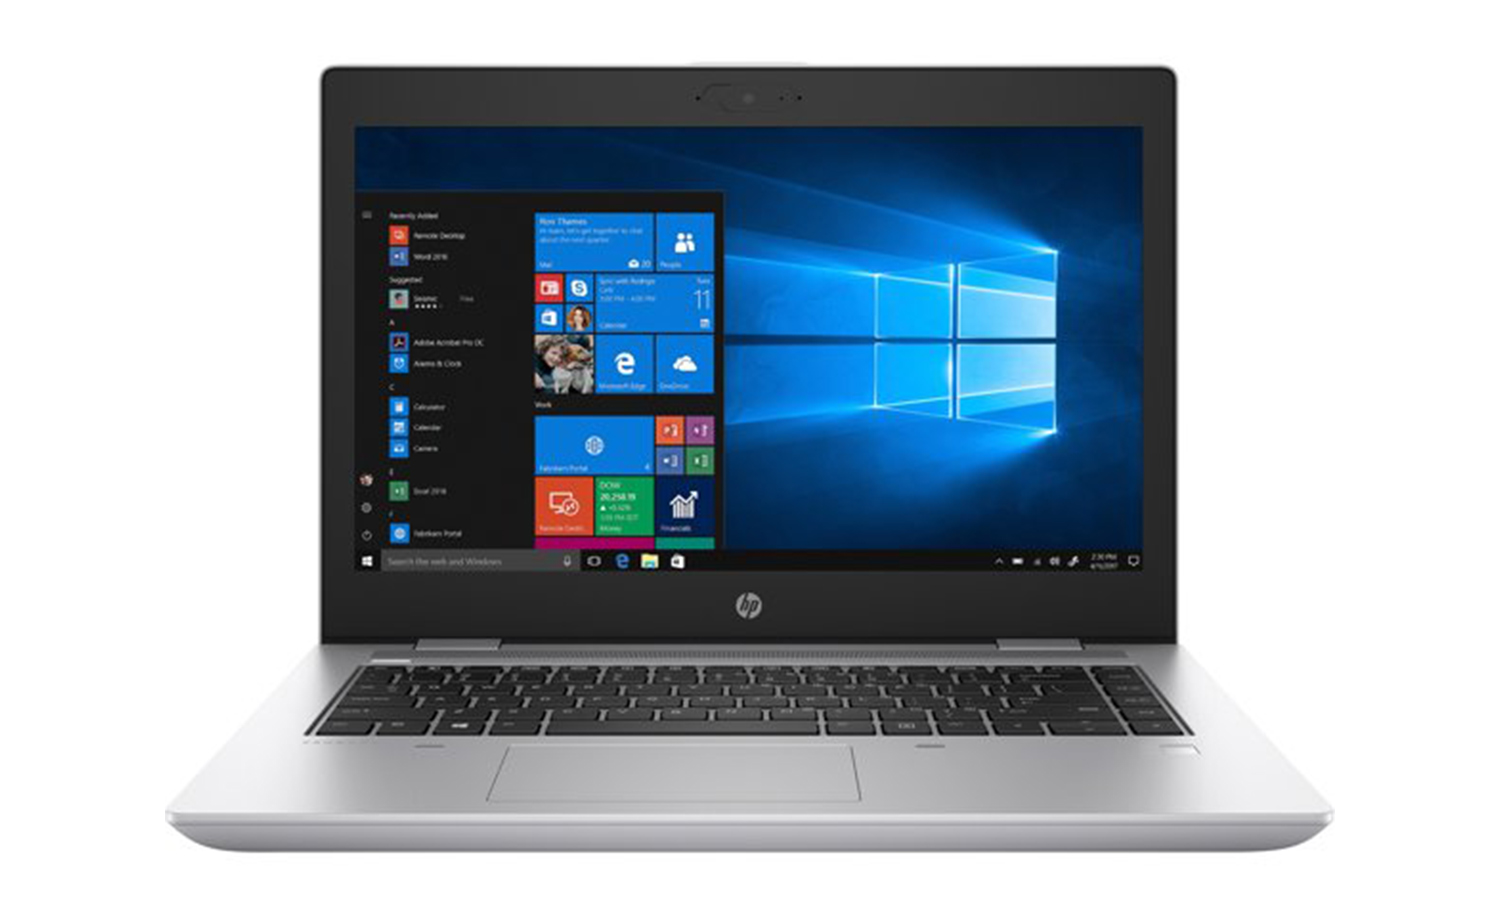 HP ProBook 640 G5 Intel Core i7 8th Gen 8GB RAM 256GB SSD Windows 10 Pro